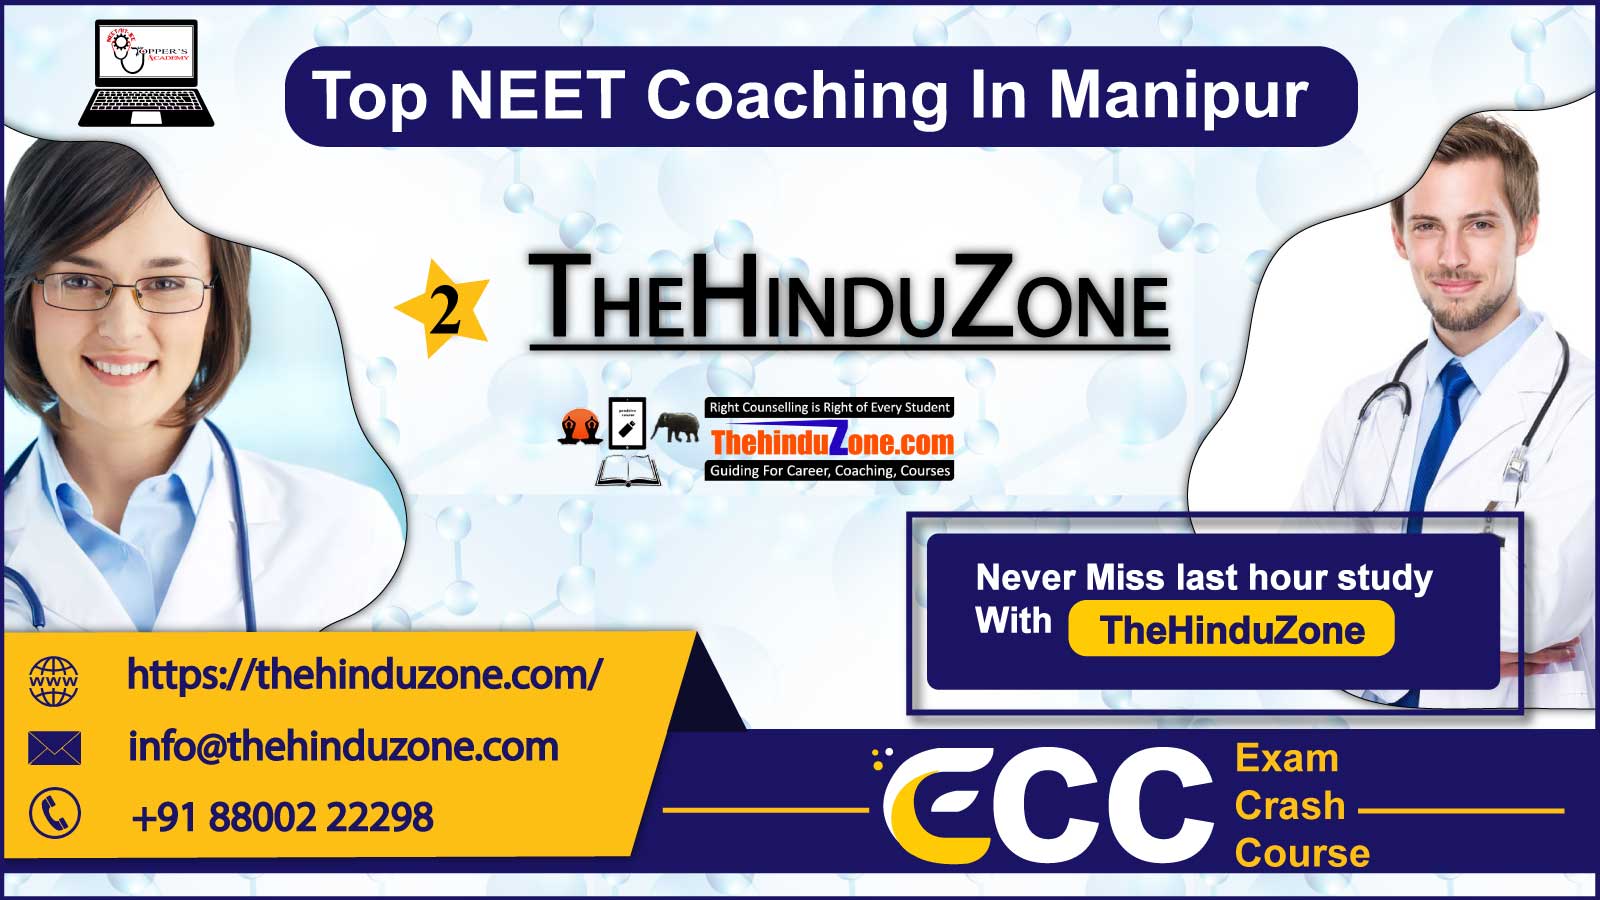 TheHinduZone NEET Coaching in Manipur 